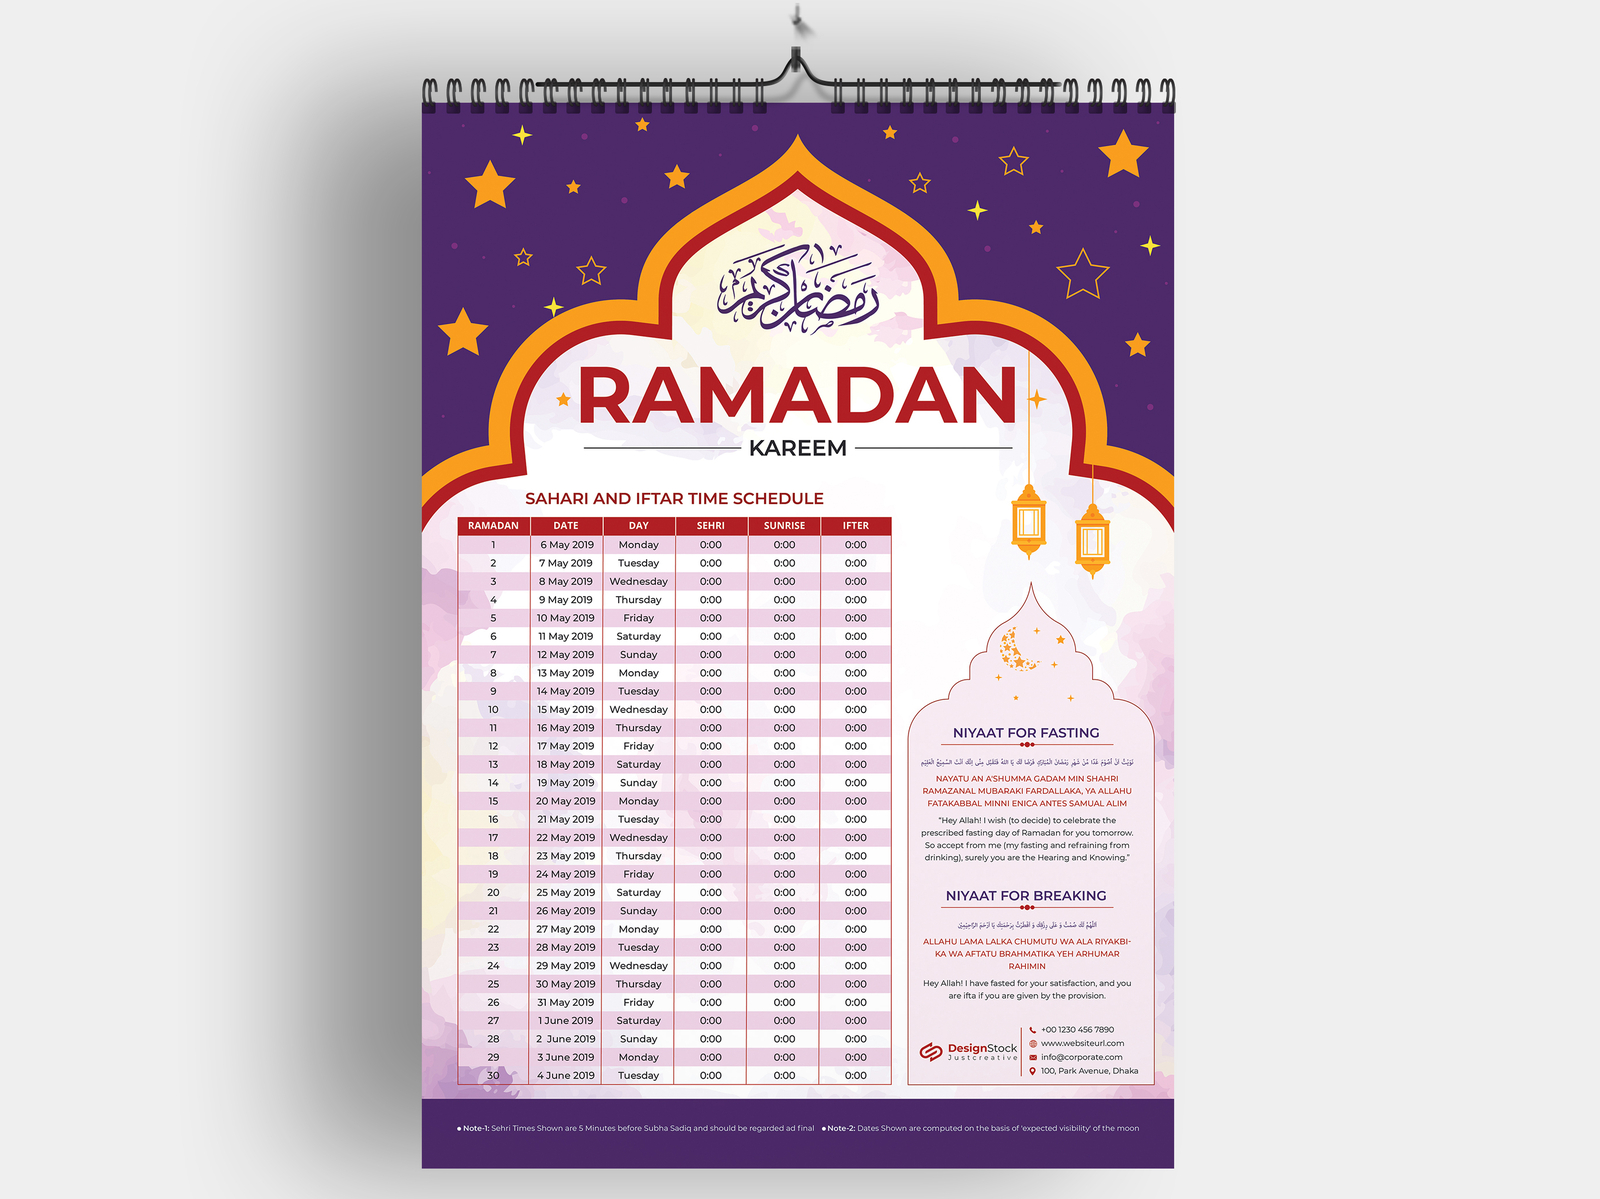 Ramadan Calendar Design Ramadan Sehri Ifter Time Schedule by Yousuf